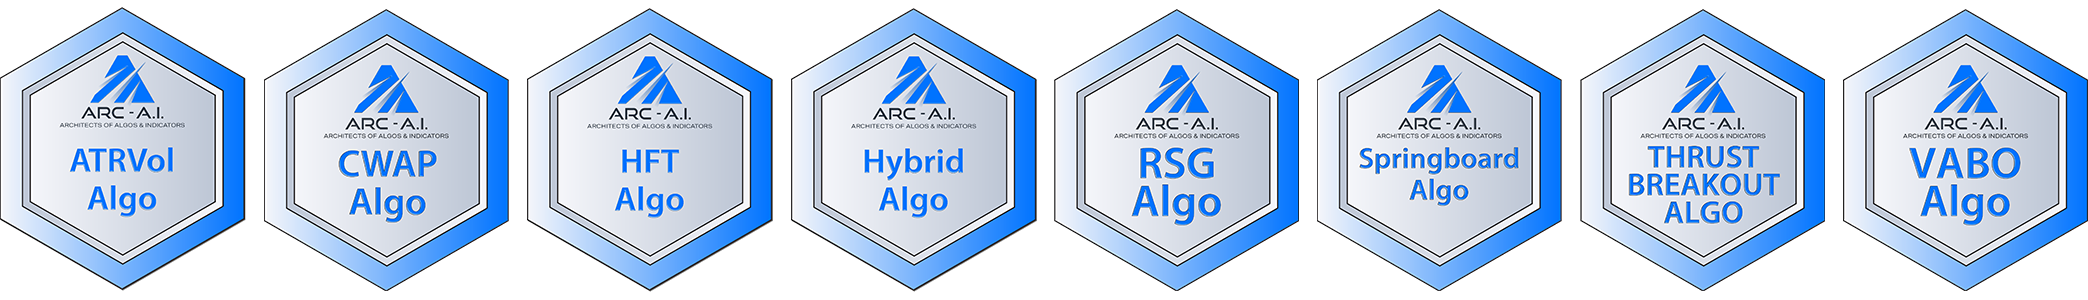 ARC-AI Algos